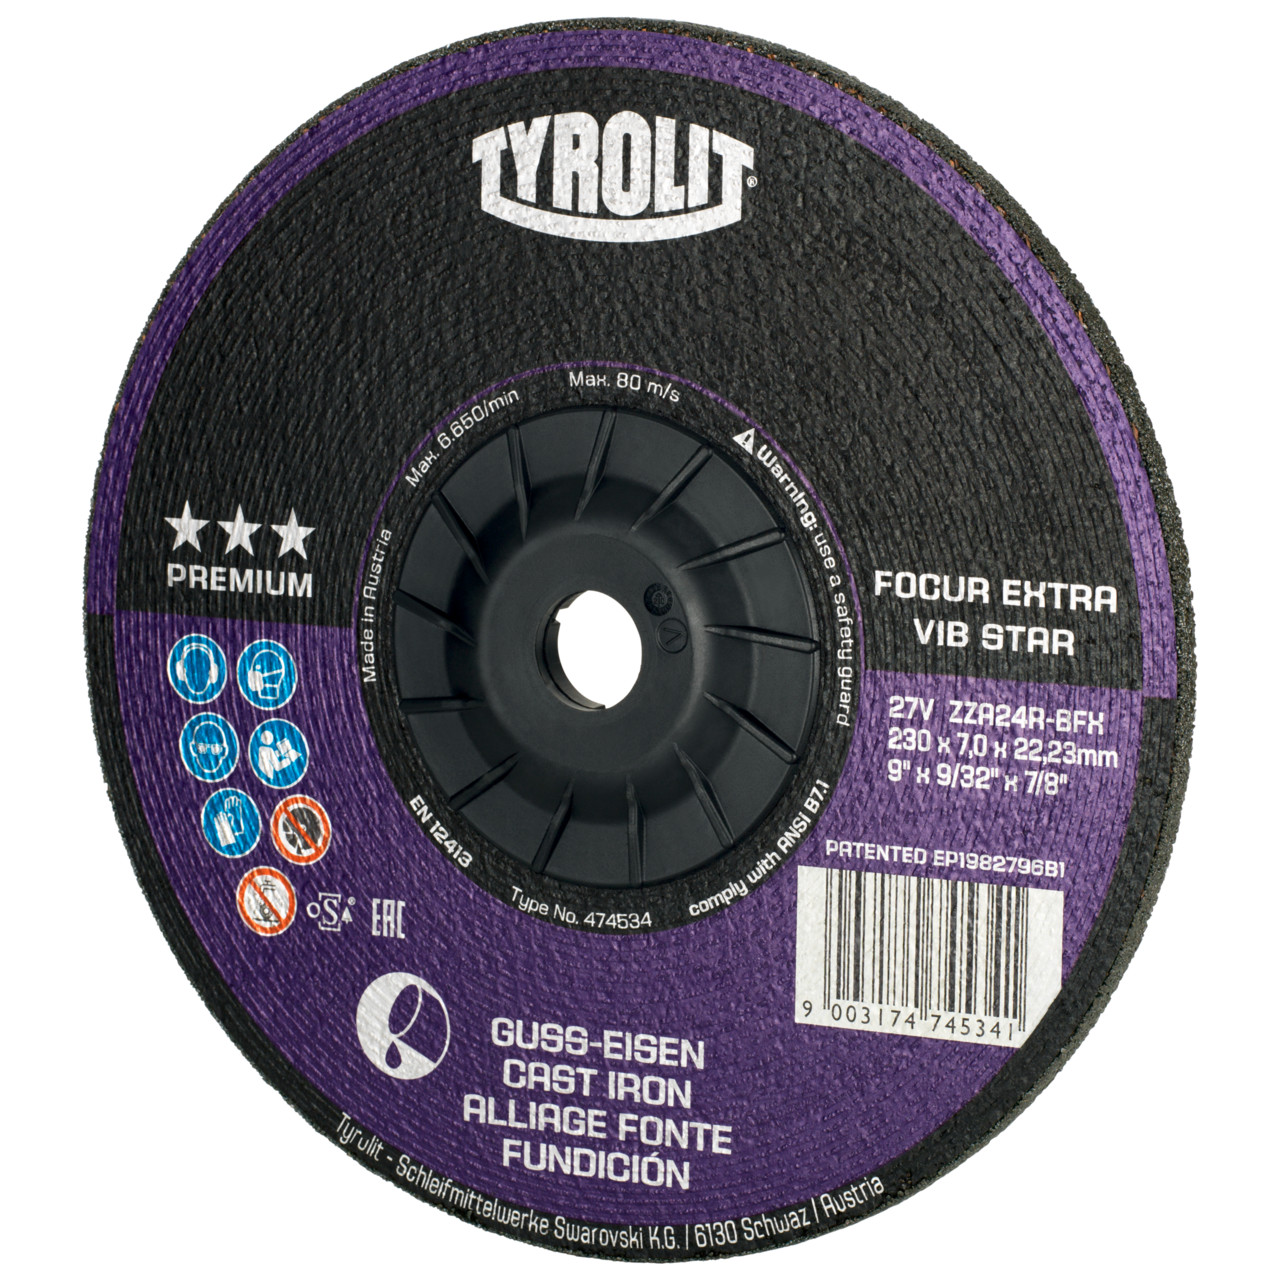 TYROLIT grinding wheel DxUxH 230x7x22.23 FOCUR Extra Vibstar for cast iron, shape: 27 - offset version, Art. 474532